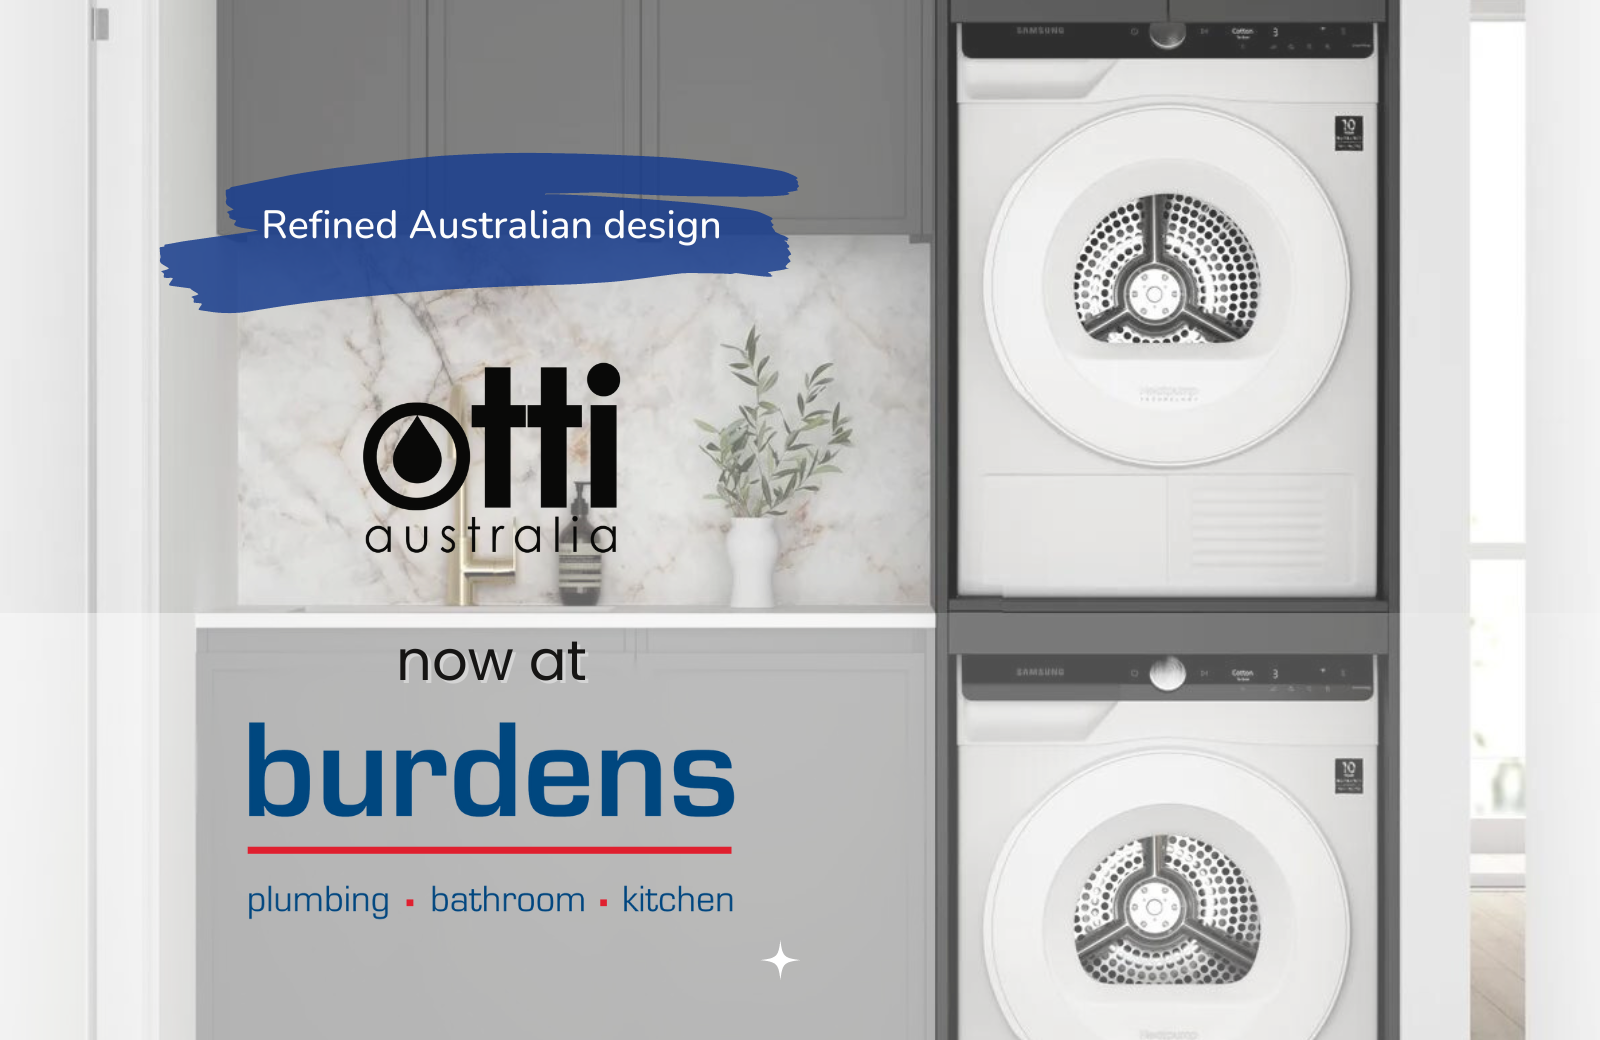 Refined Australian design: Introducing New Otti Australia Available at Burdens!